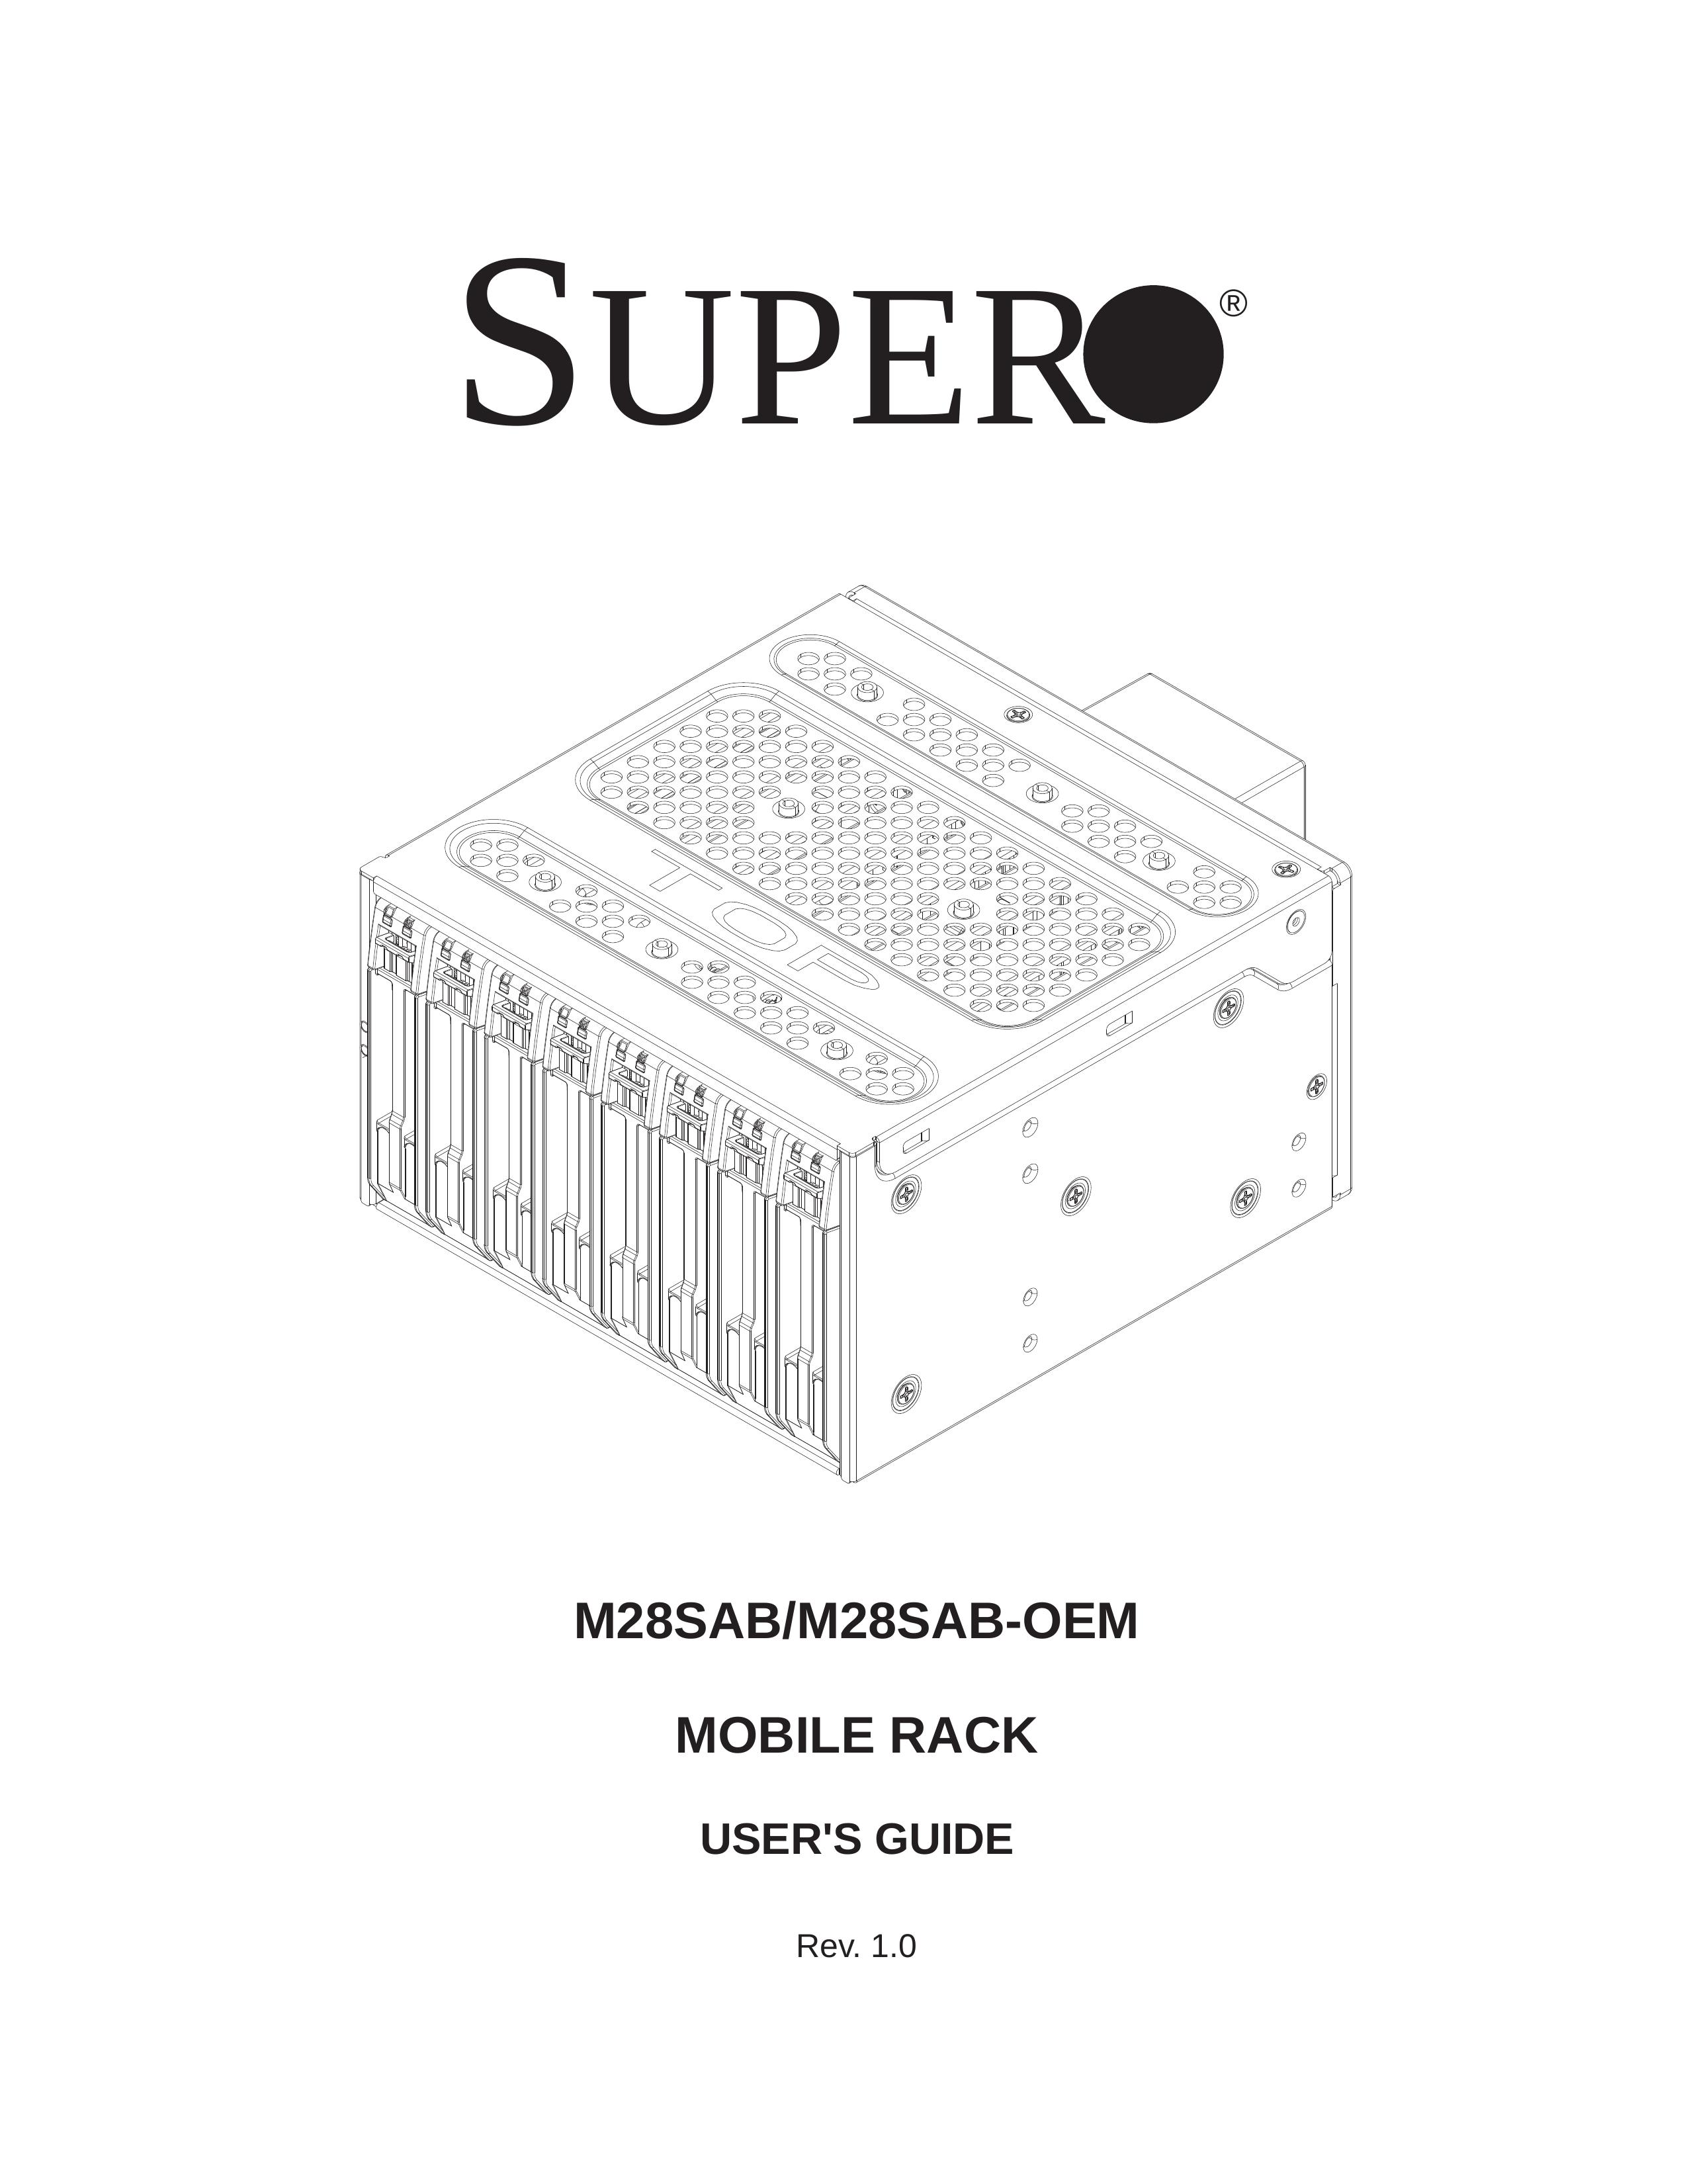 SUPER MICRO Computer m28sab/m28sab-oem Recording Equipment User Manual